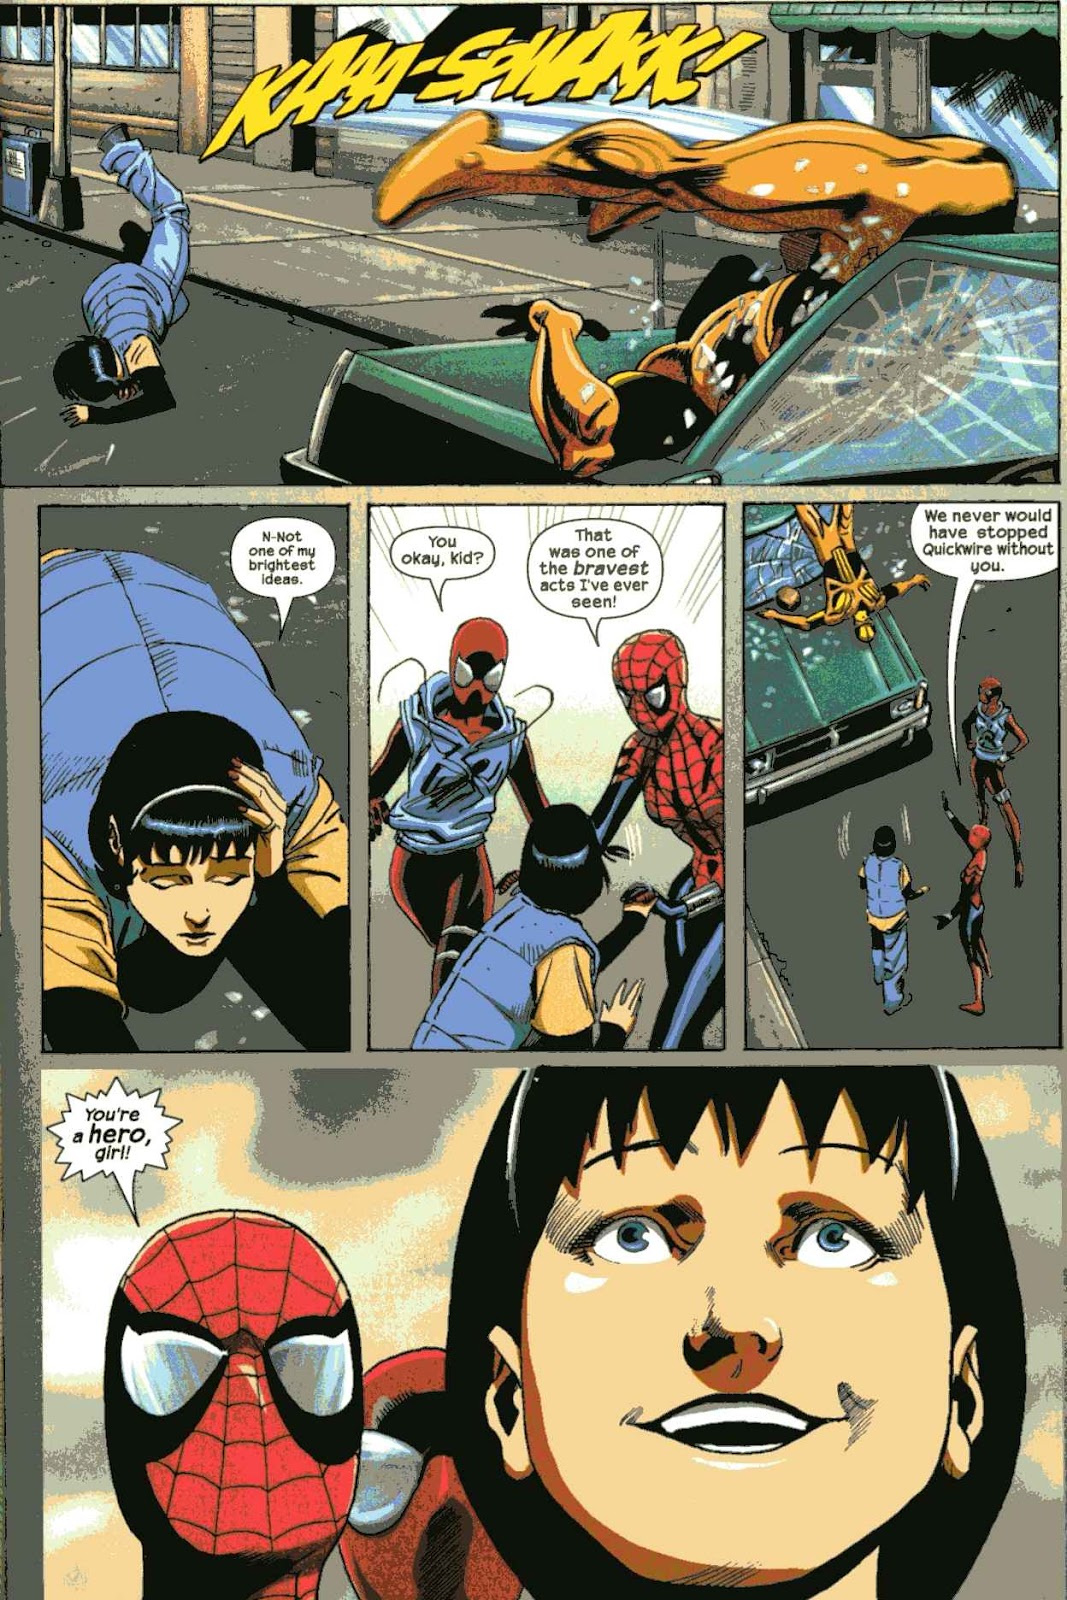 Spider Girl V1 100 Read All Comics Online